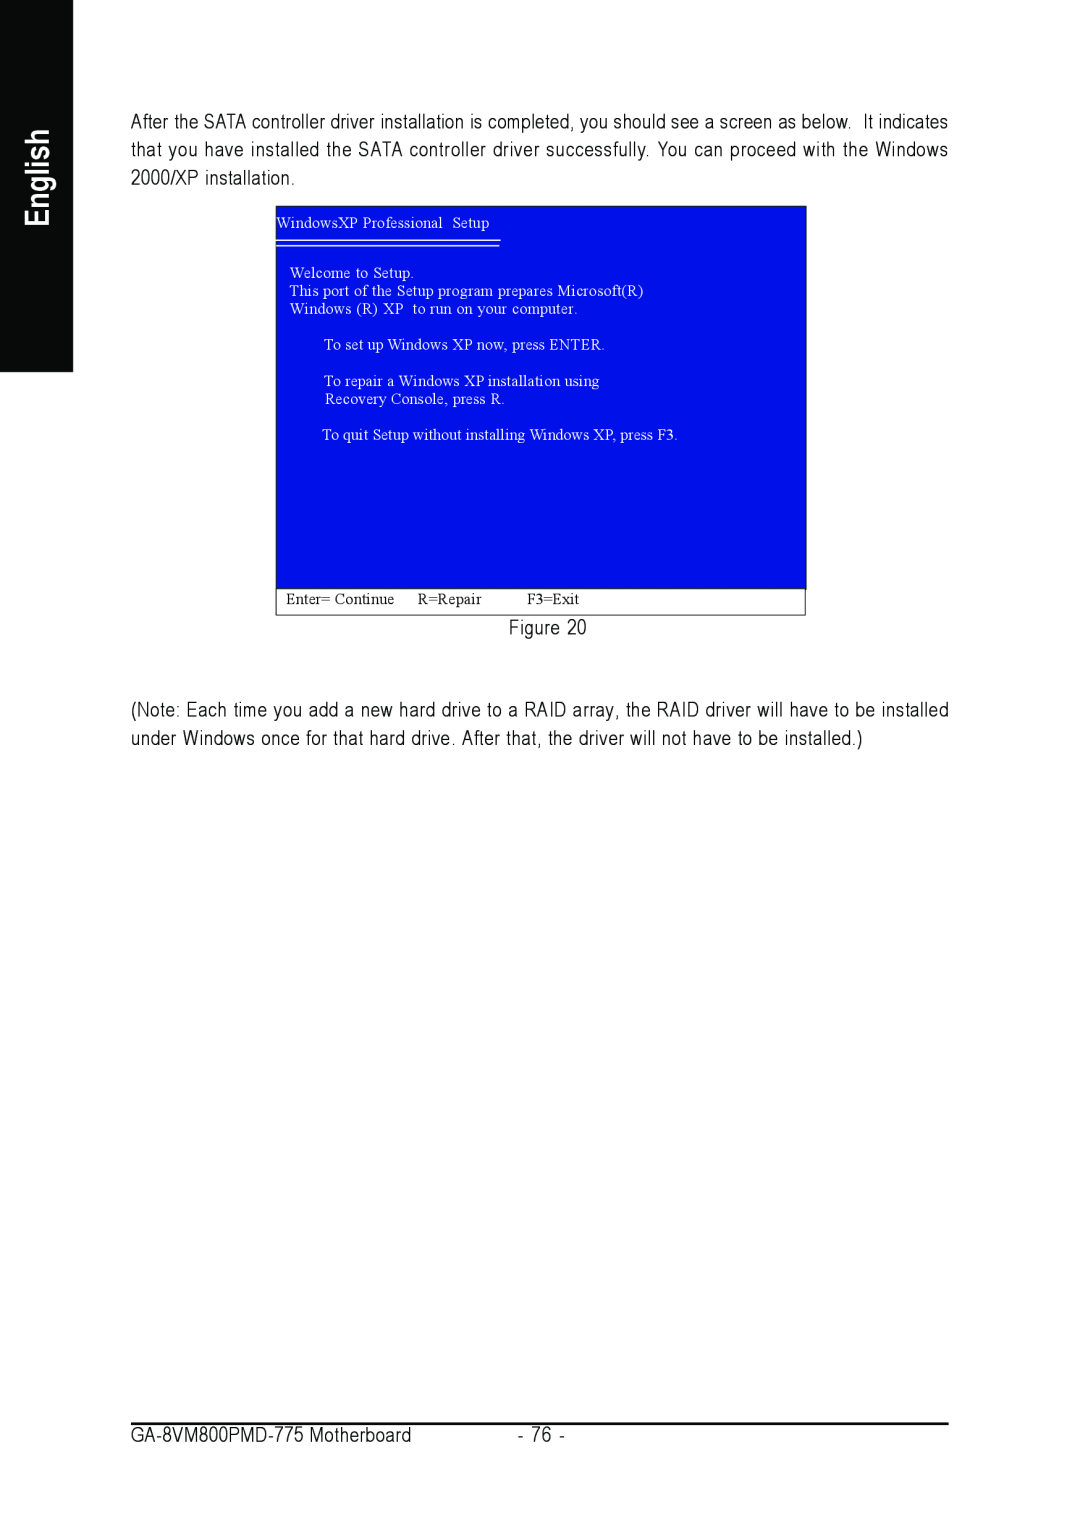 Intel GA-8VM800PMD-775 user manual English, WindowsXP Professional Setup Welcome to Setup 